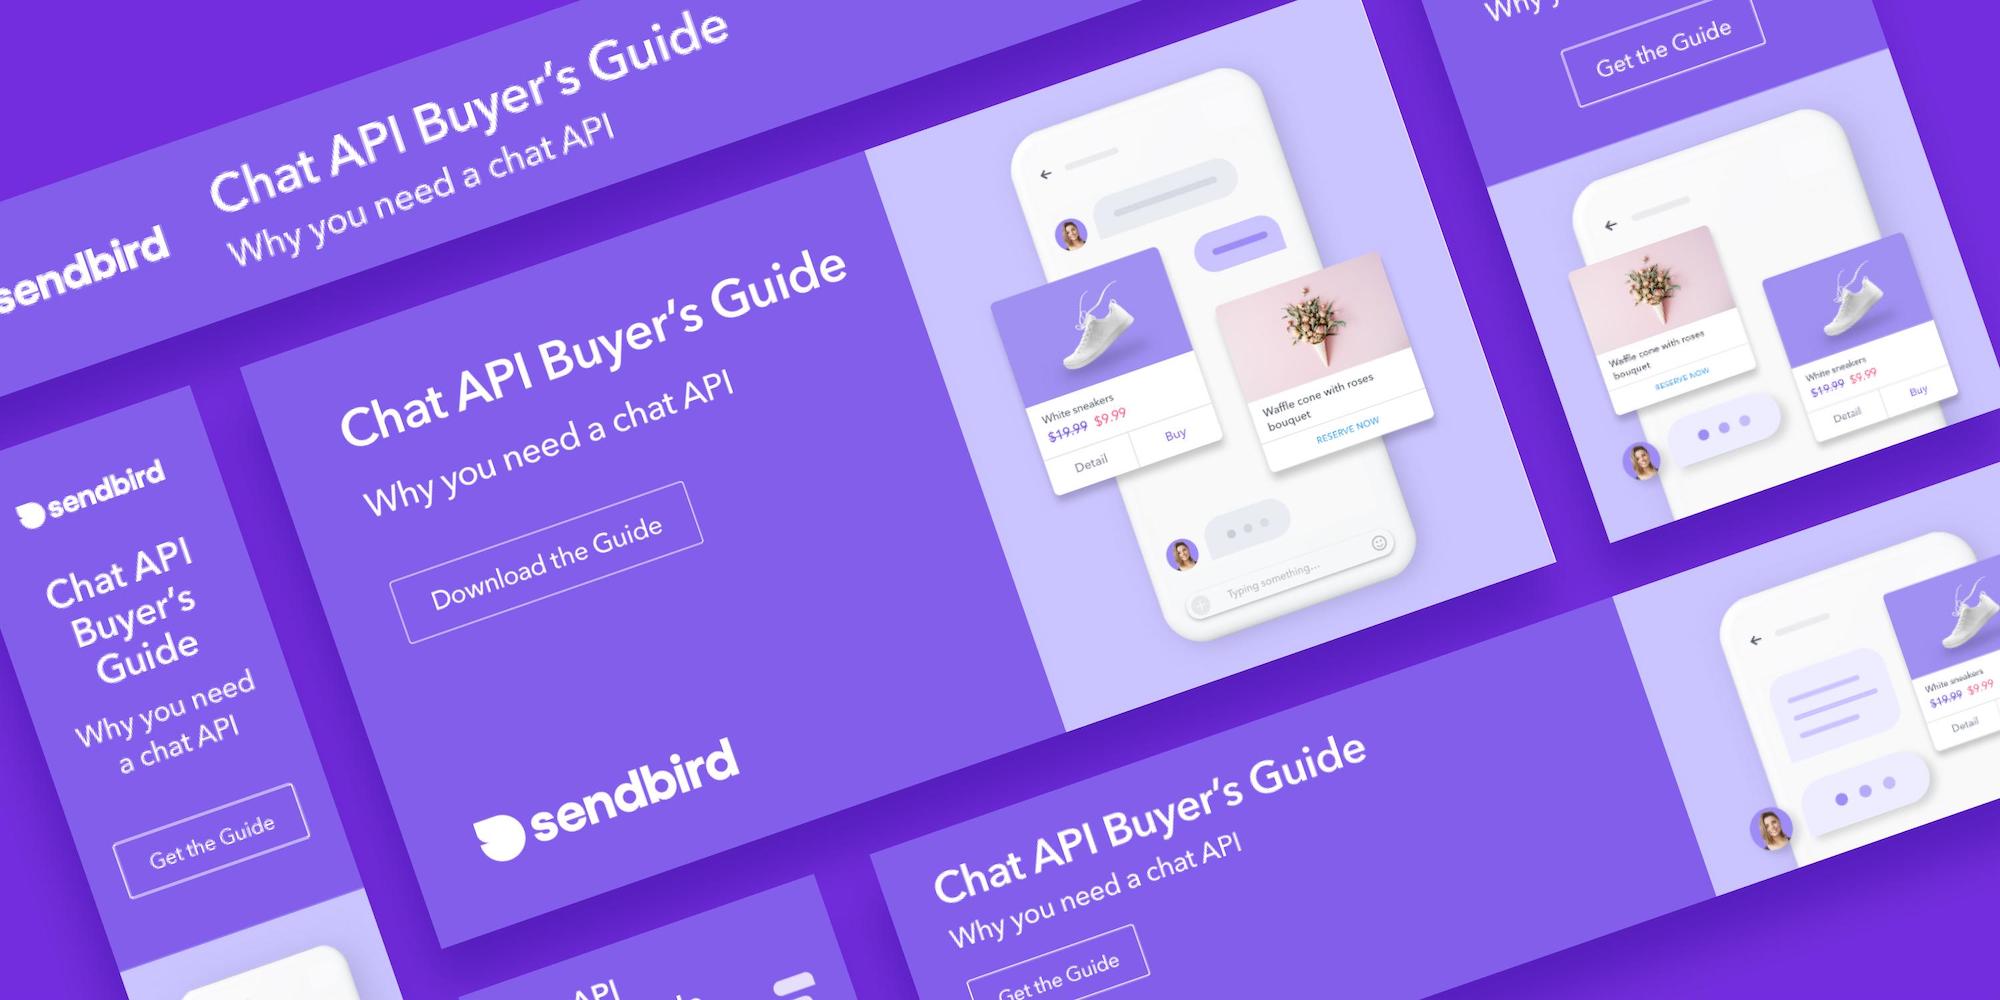 Mock-up of digital ads for Sendbird's Chat API Buyer's Guide